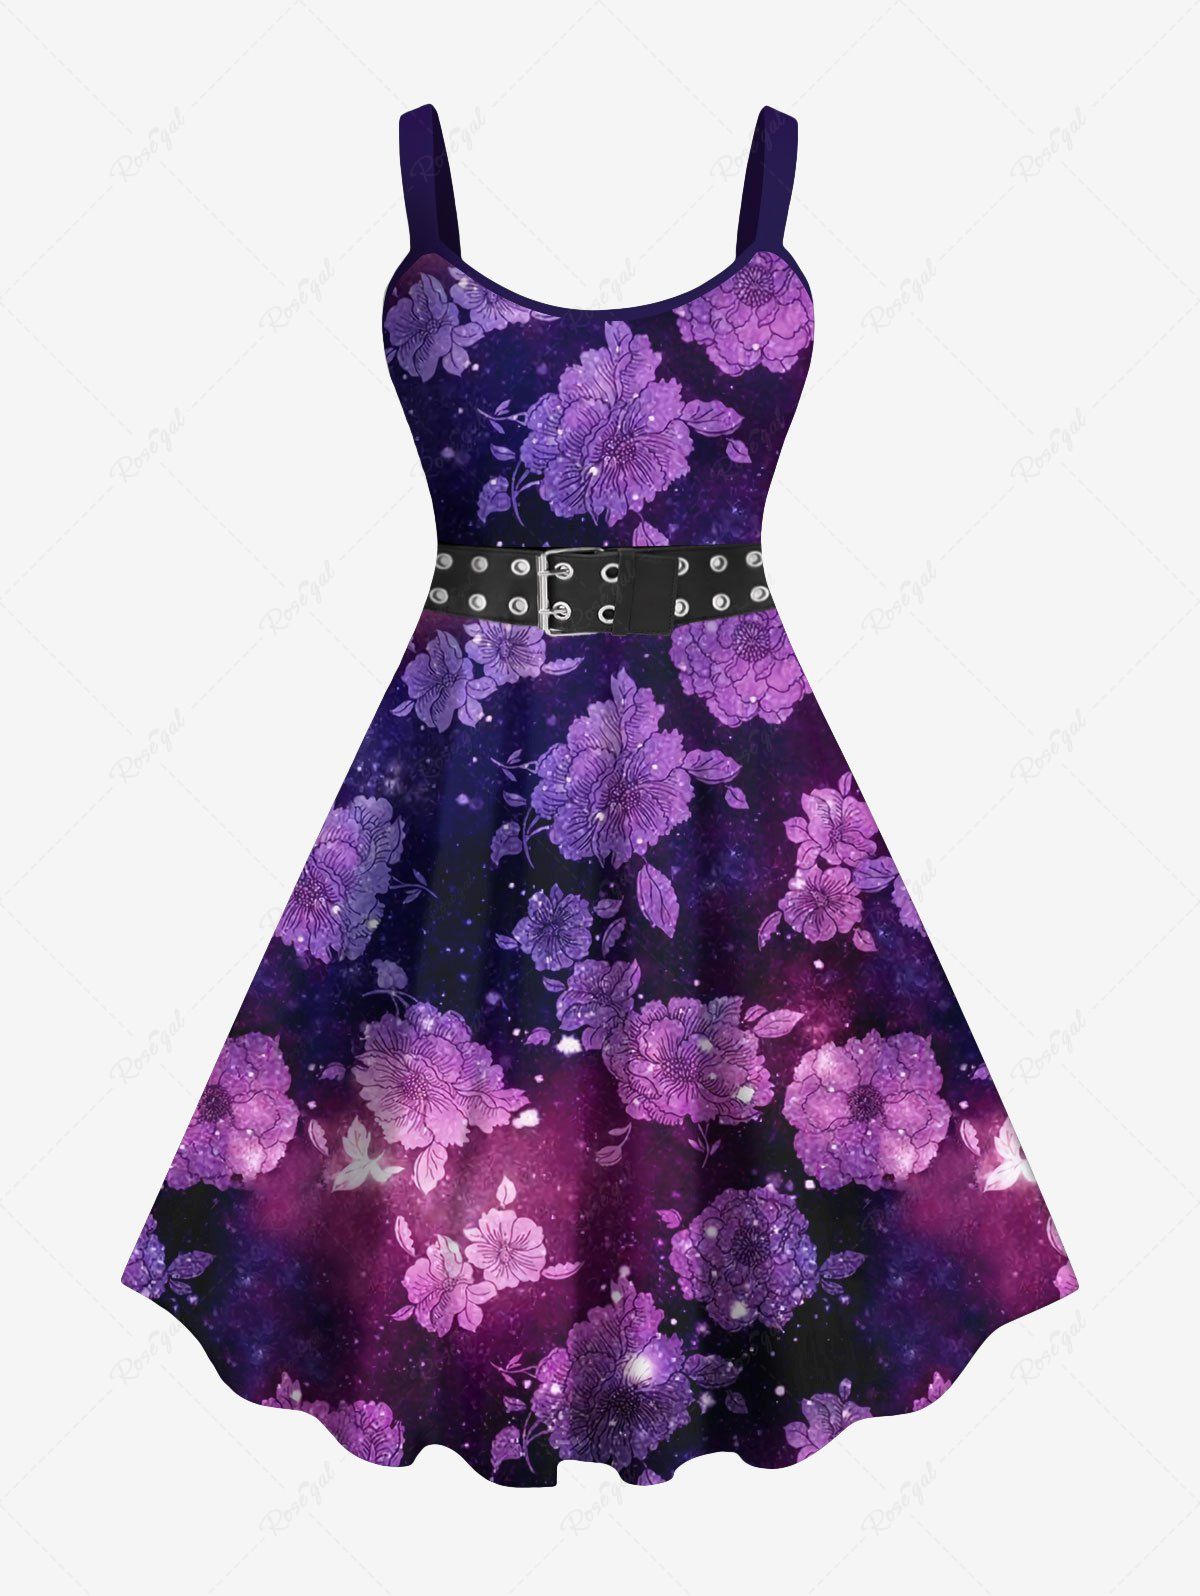 Chic Plus Size Flowers Leaf Galaxy Glitter Sparkling Sequin Grommets Buckle Belt 3D Print Tank Party Dress  